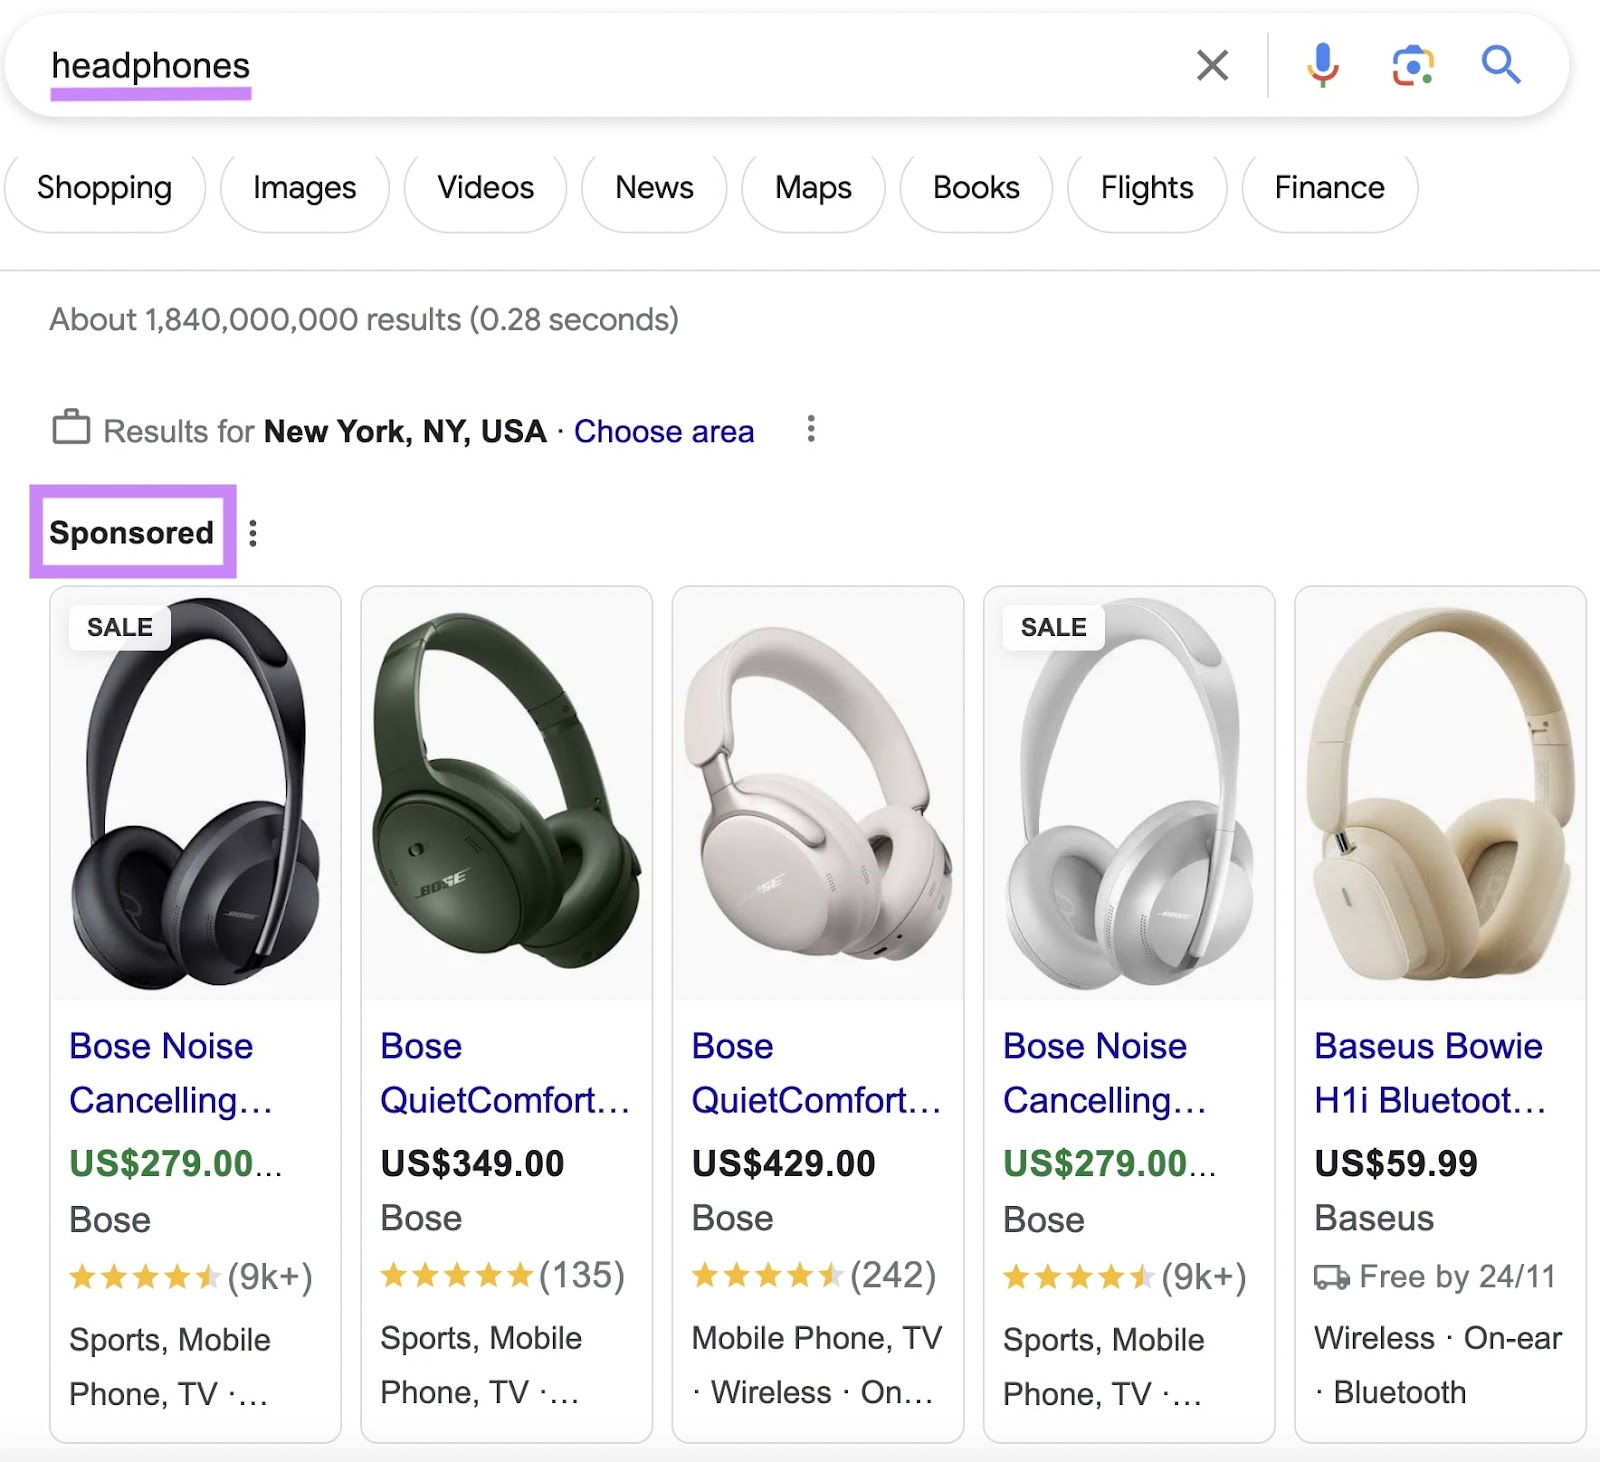 Shopping ads for "headphones" on Google's SERP